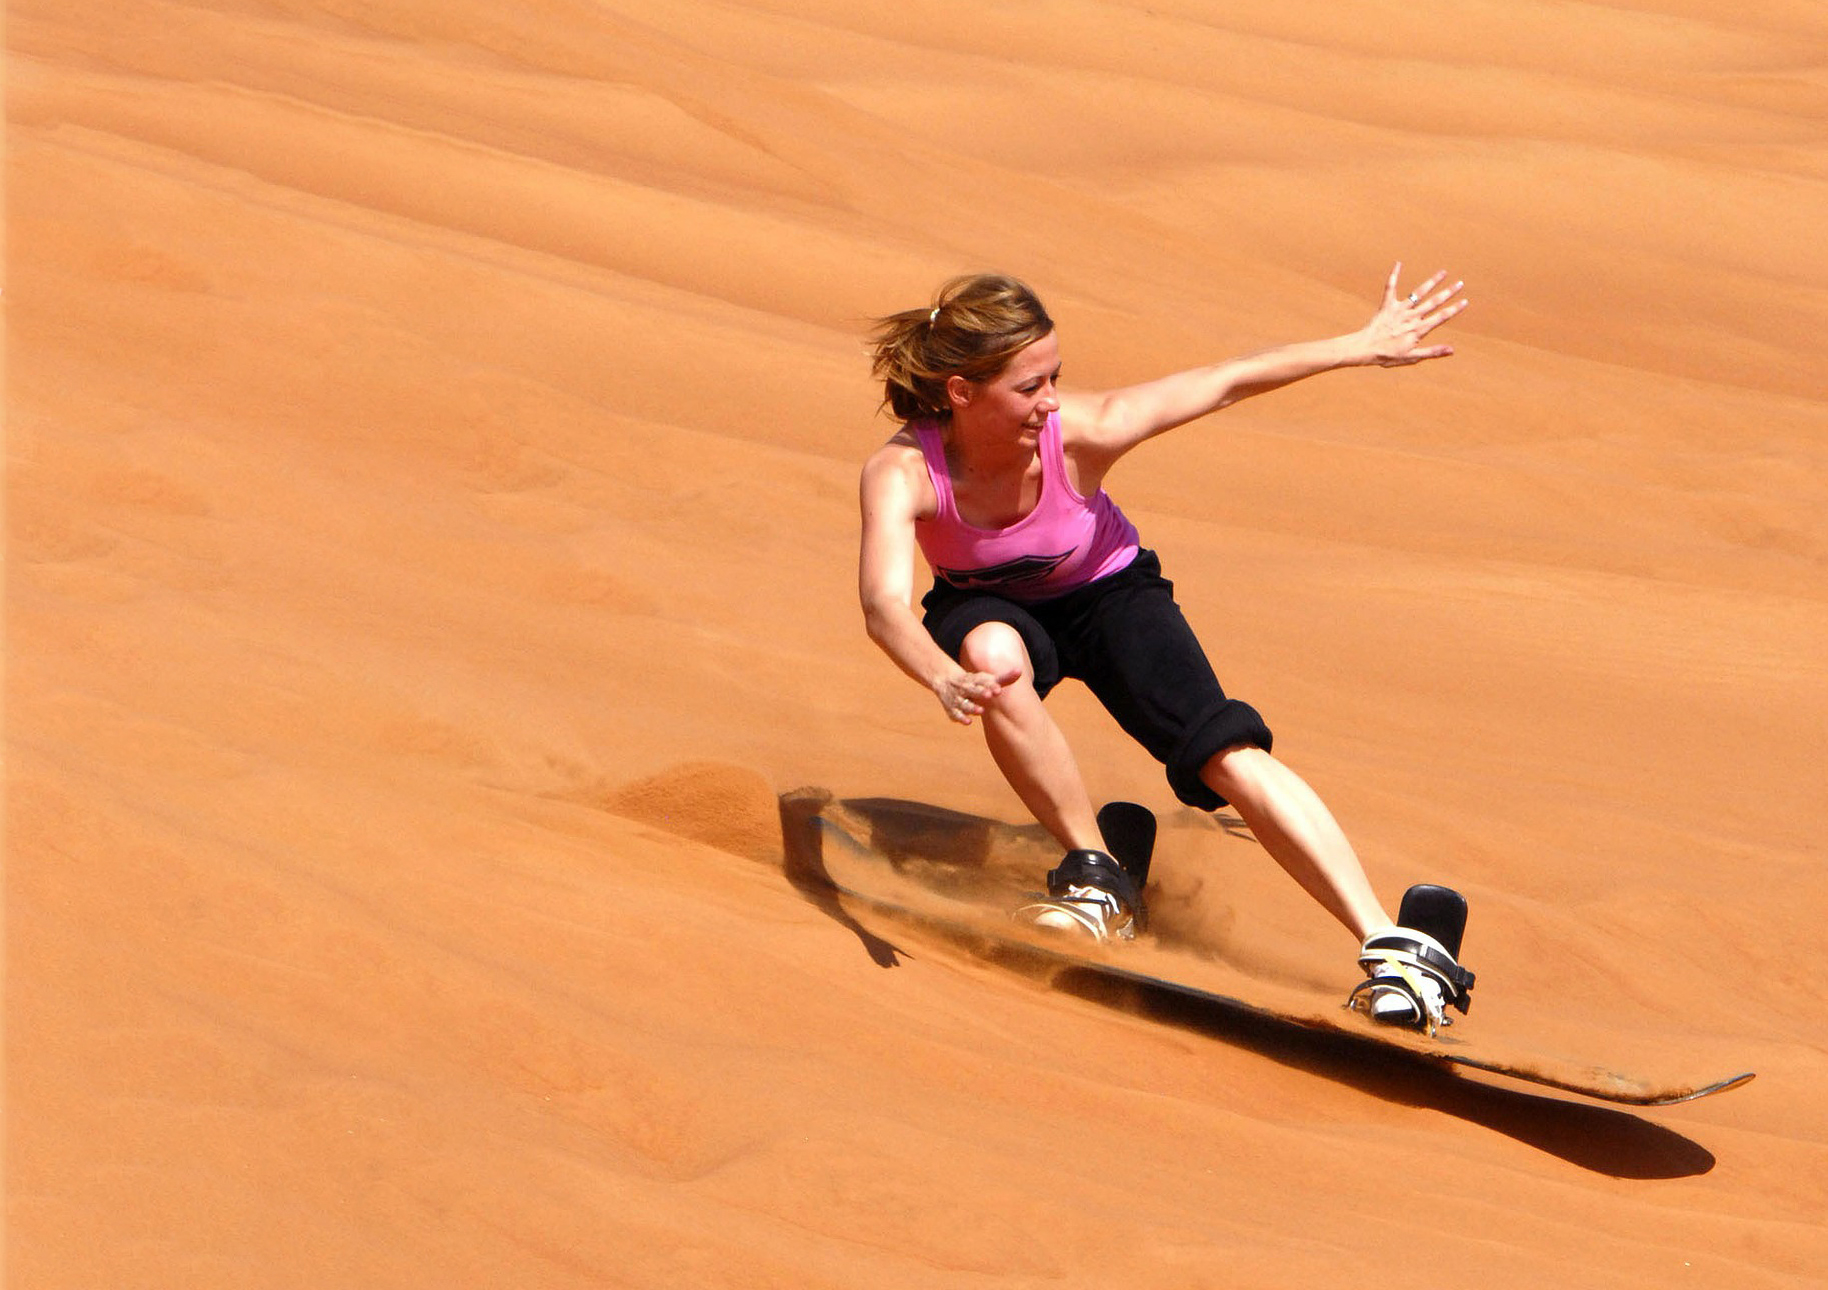 A woman rides down a dune on a sandboard.